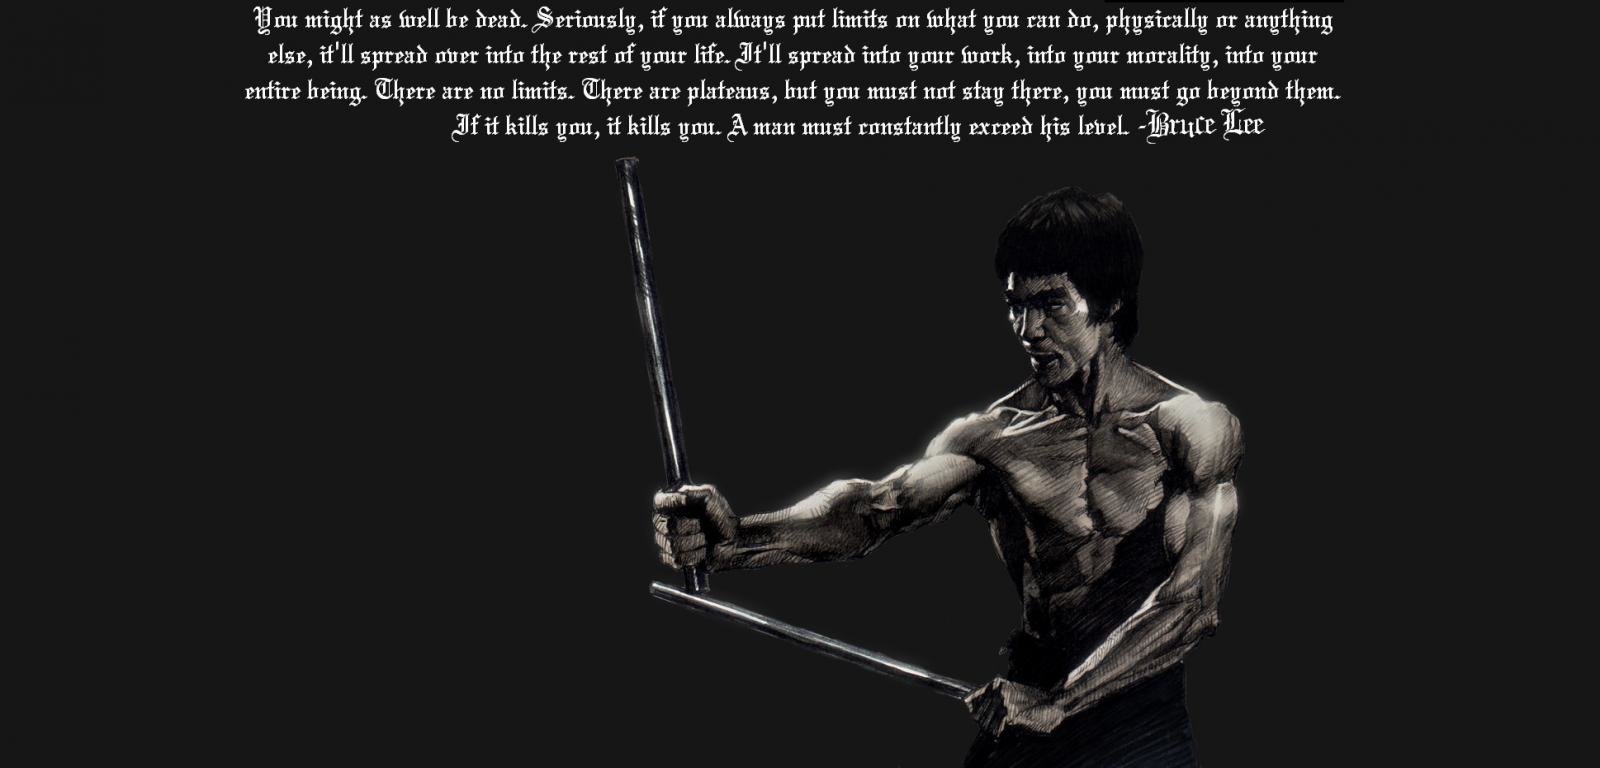 Download hd 1600x768 Bruce Lee desktop background ID:194261 for free